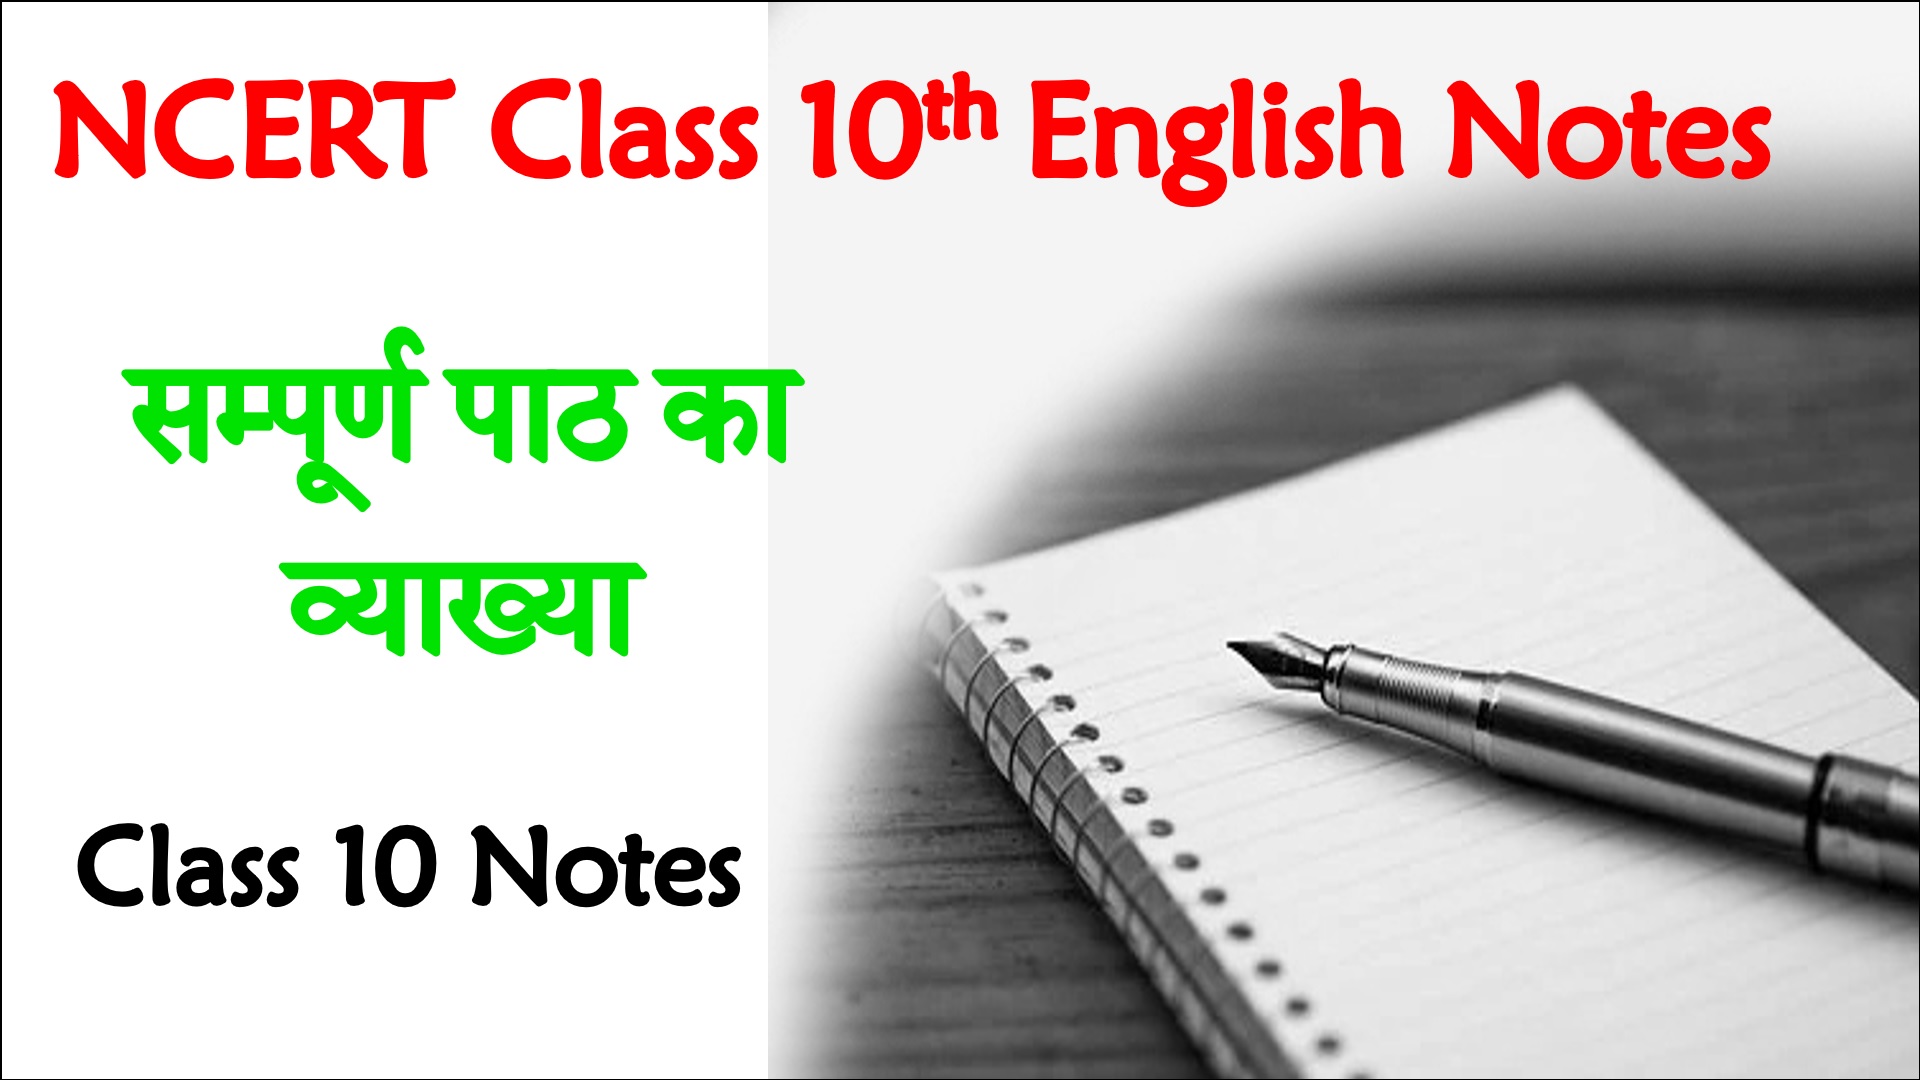 NCERT Class 10 English First Flight Solutions Notes